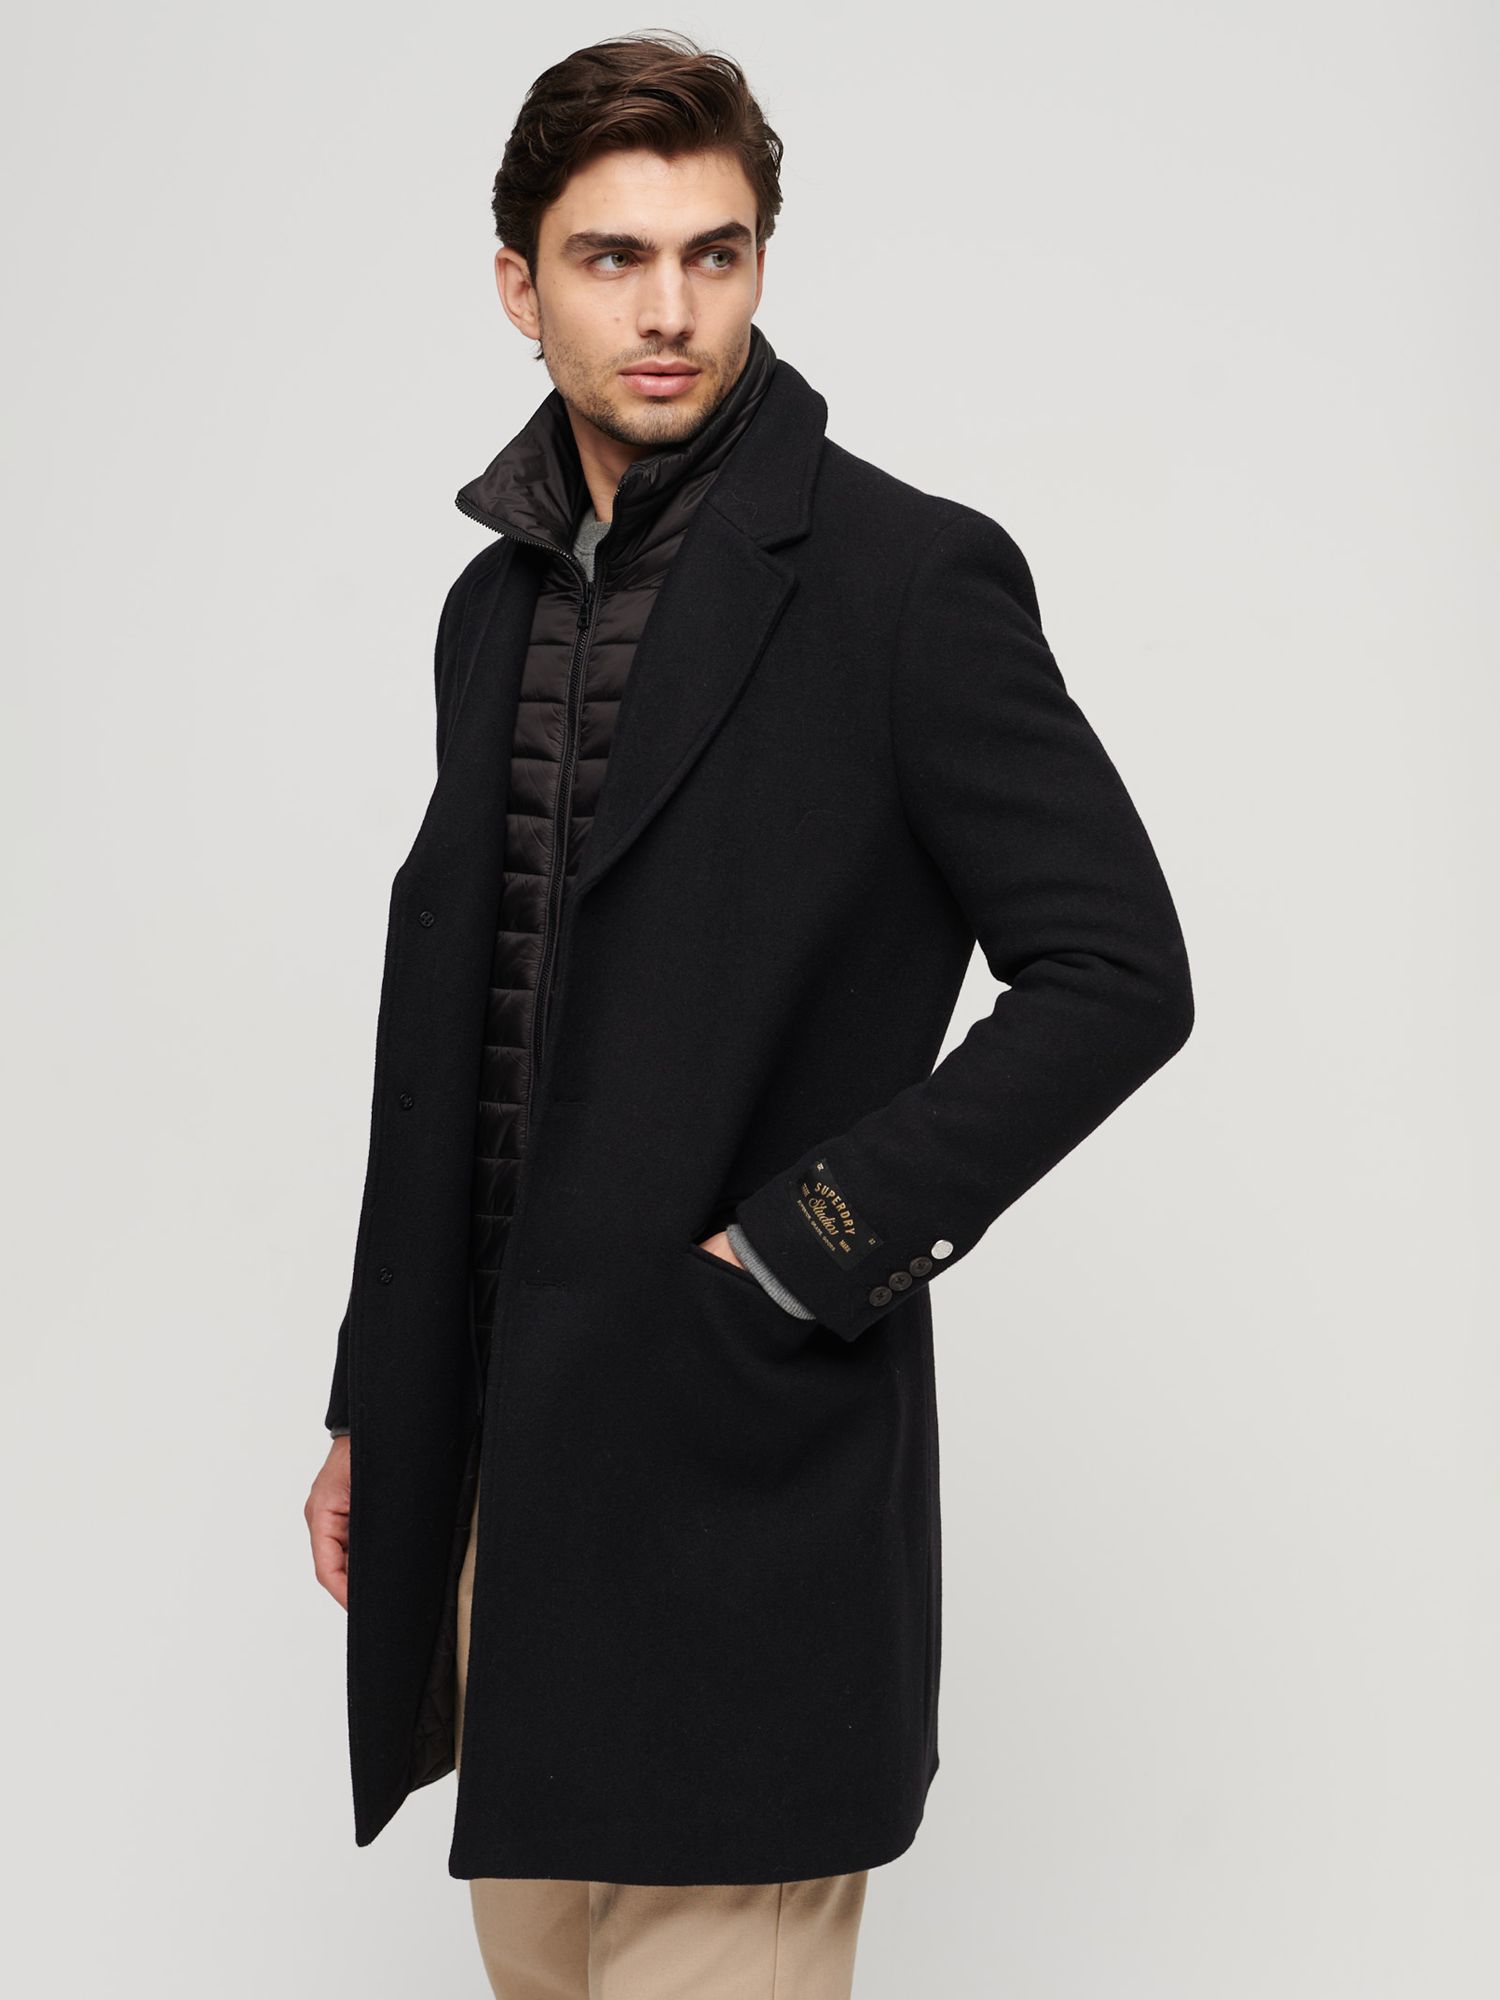 Superdry 2 In 1 Wool Town Coat, Black at John Lewis & Partners